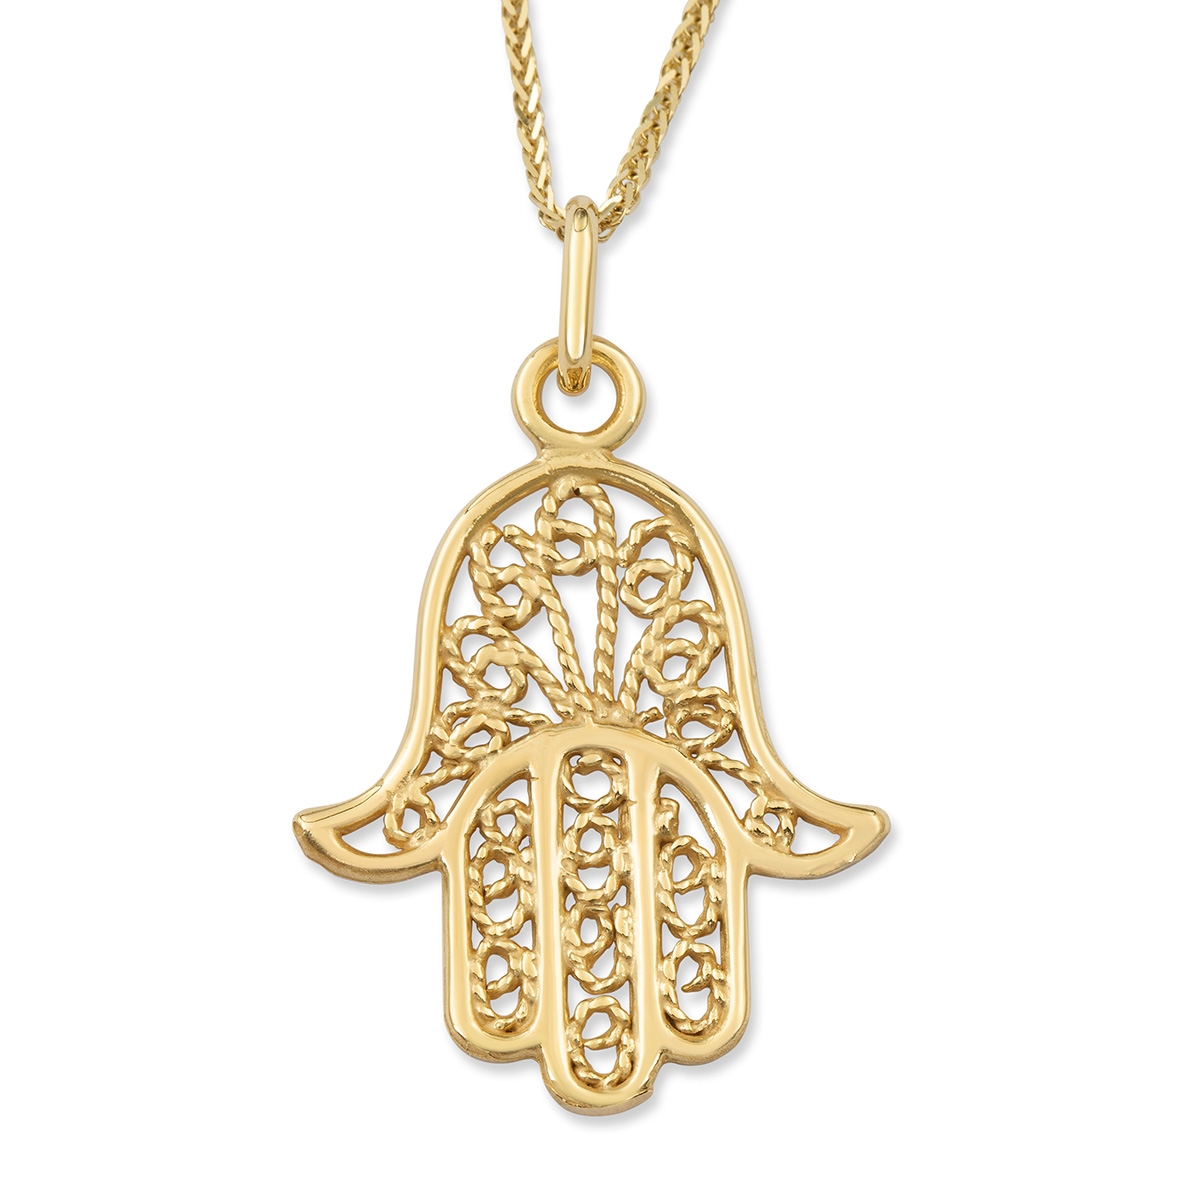 Large 14K Yellow Gold Hamsa Pendant Necklace With Rope Filigree Design - 1